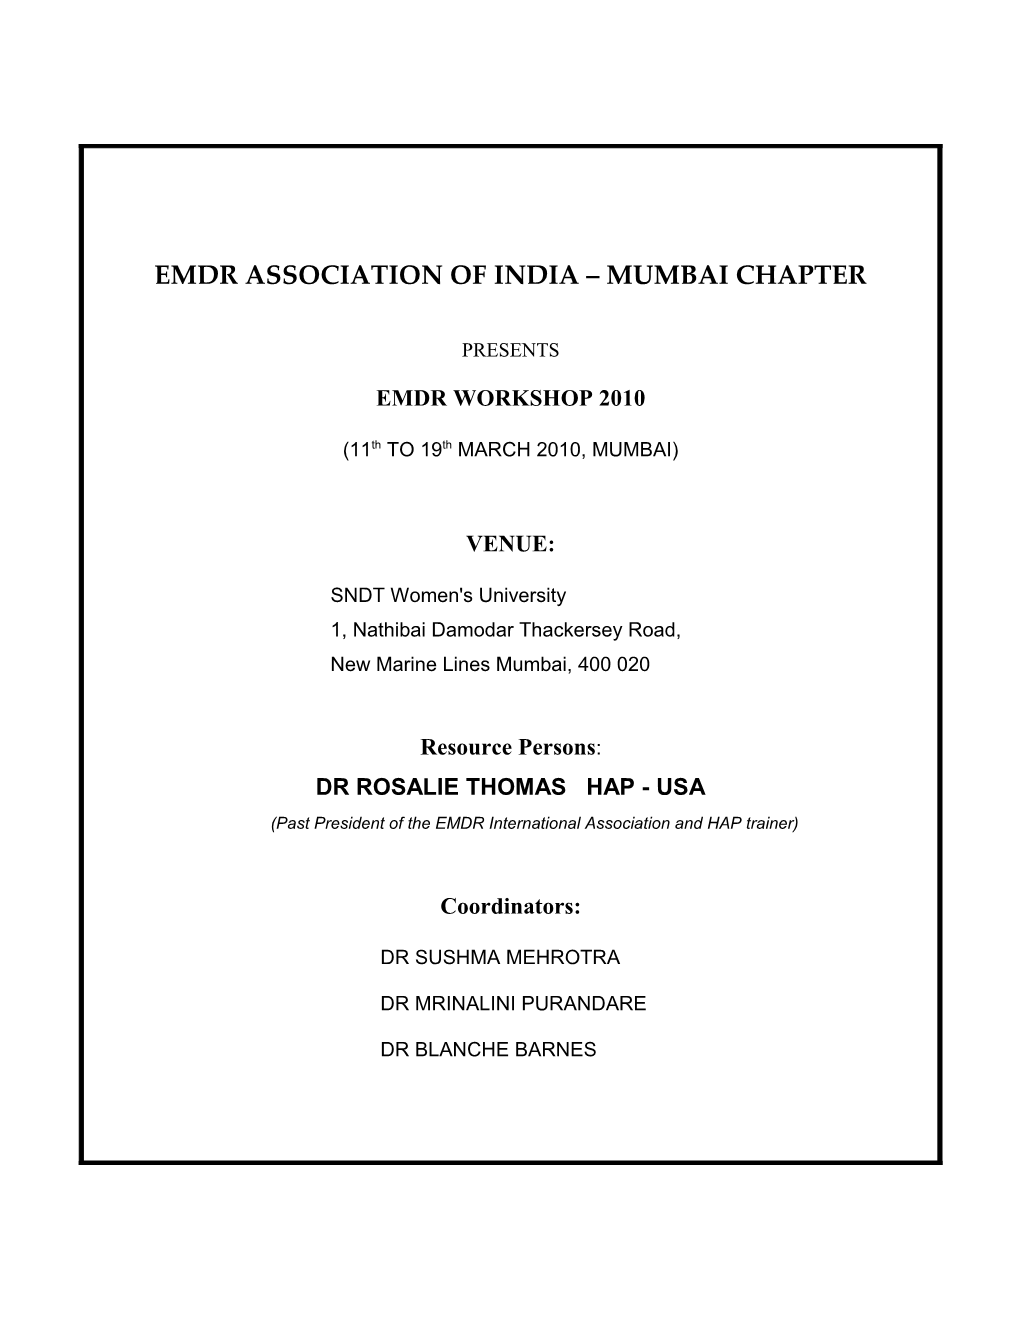 Emdr Association of India Mumbai Chapter